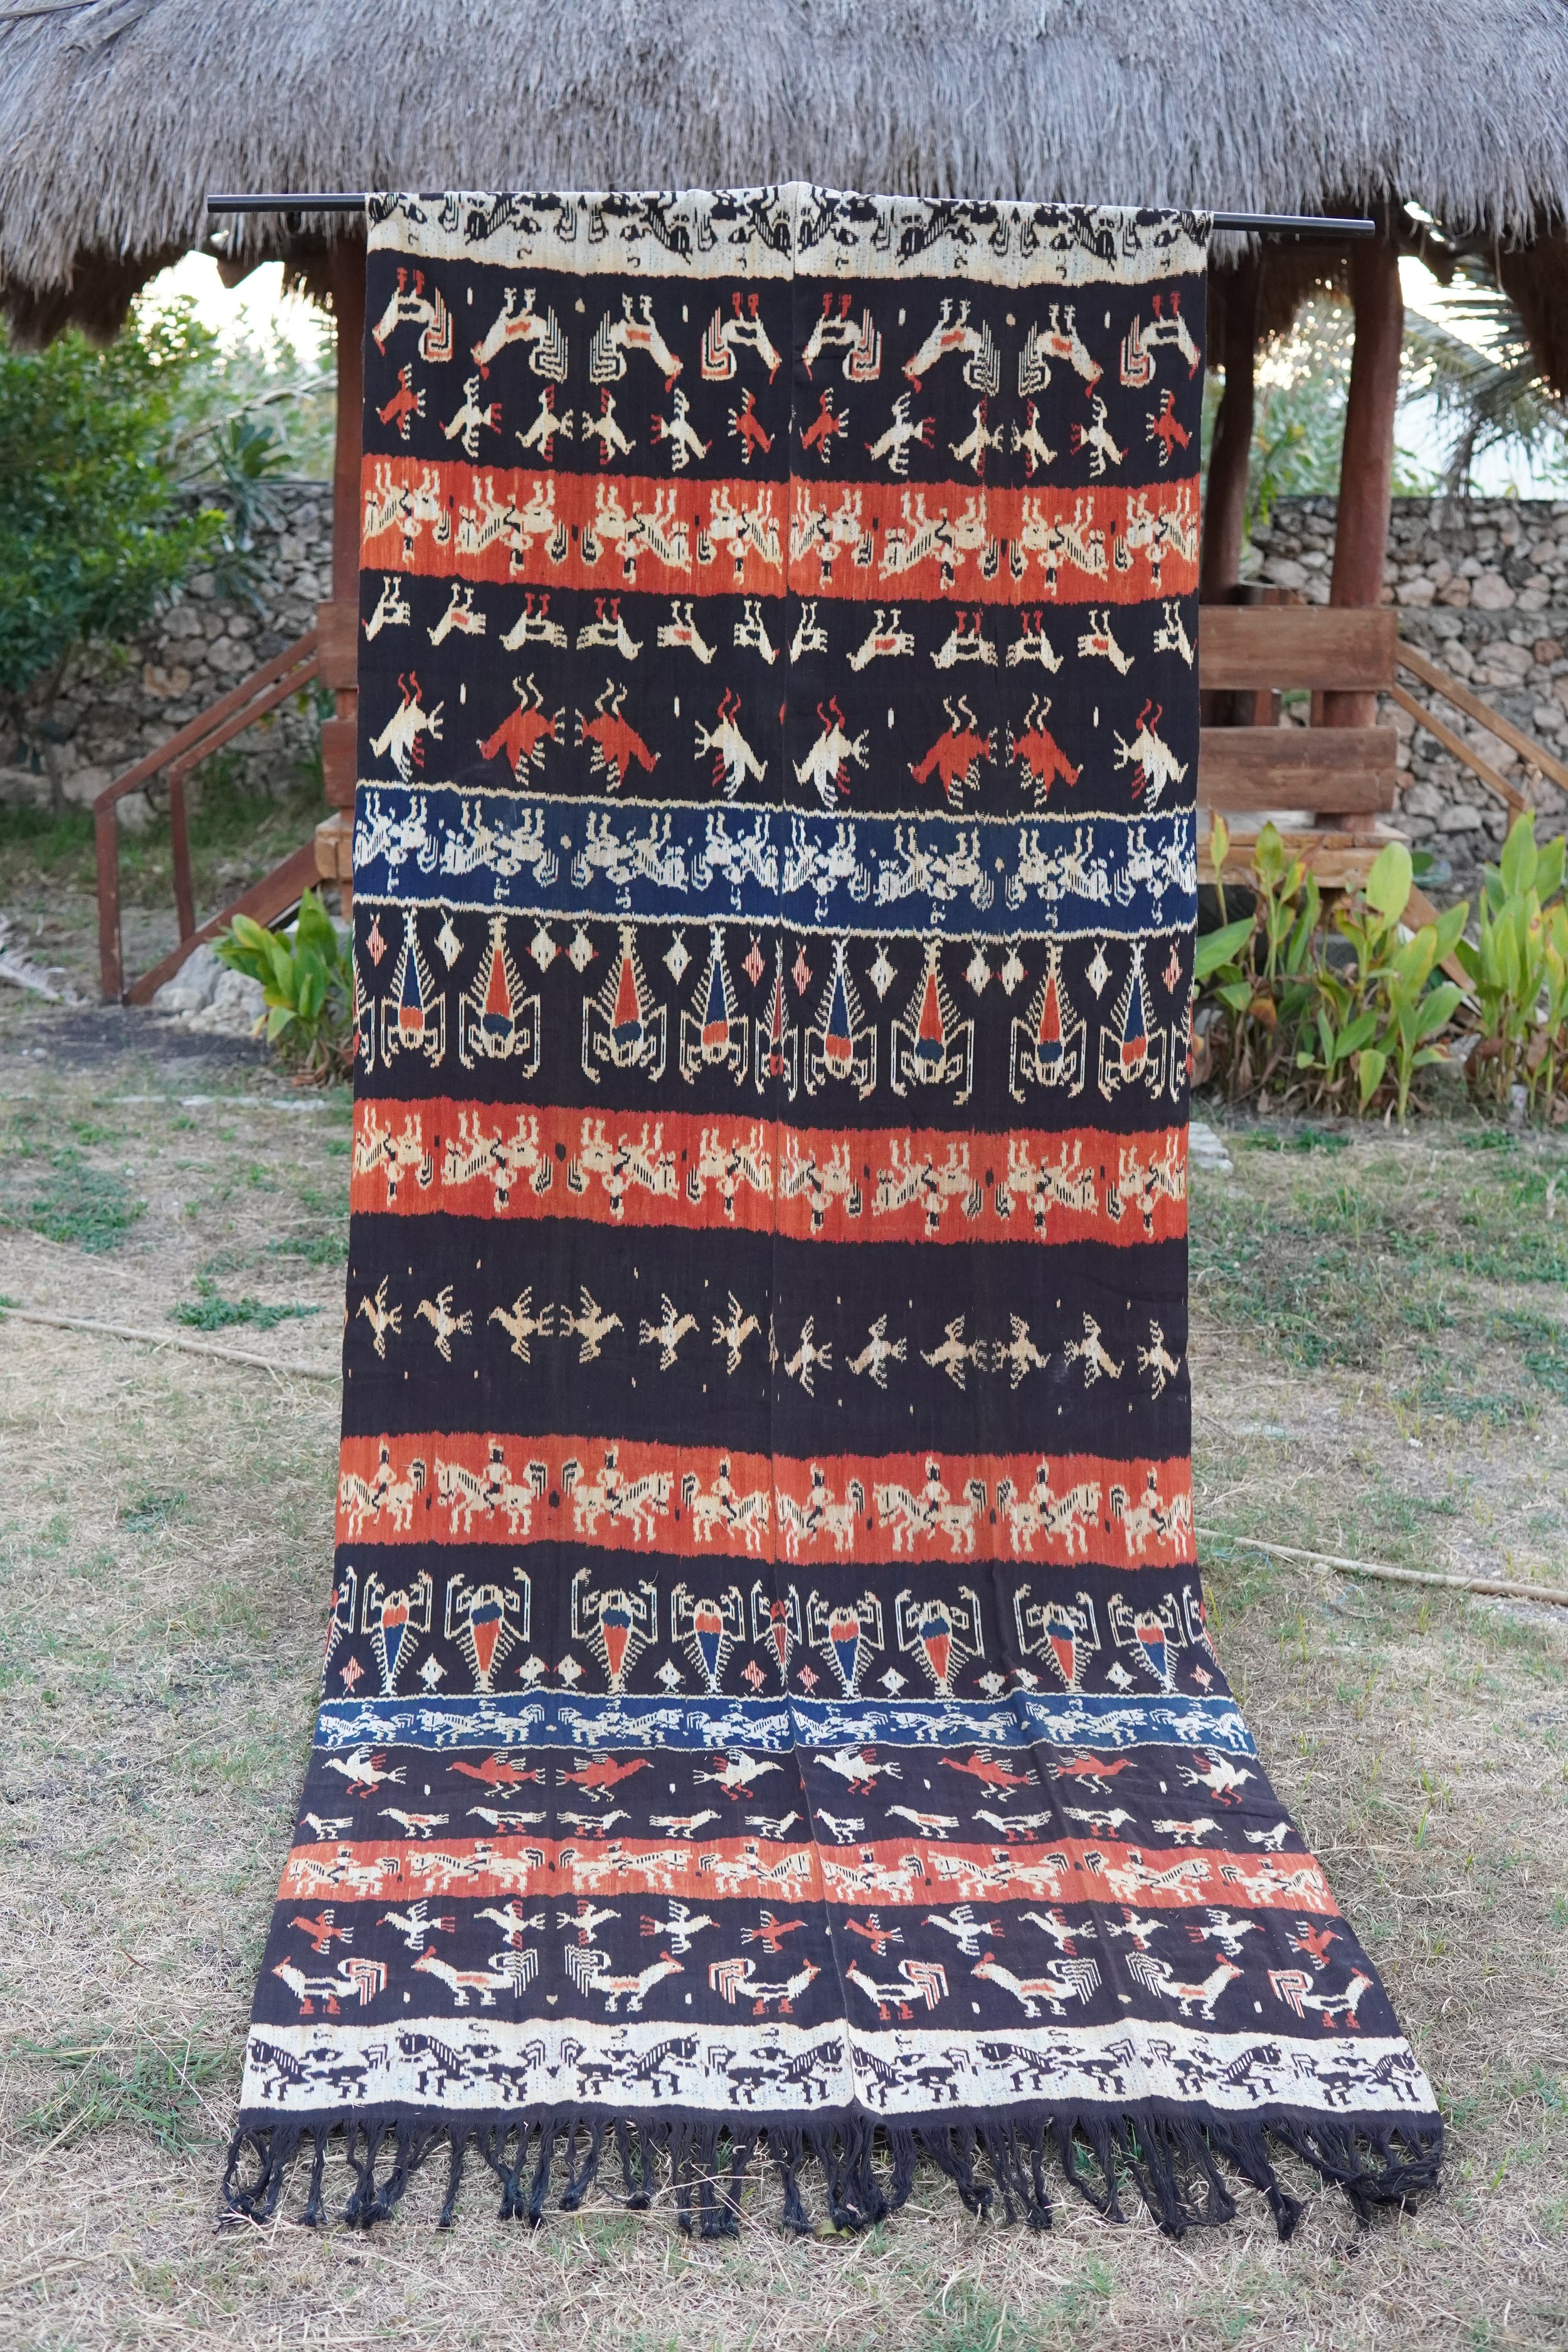  Kaliuda Kombu Talabba Muru    2019 cotton with natural indigo and morinda root dye 314 x 111 cm  